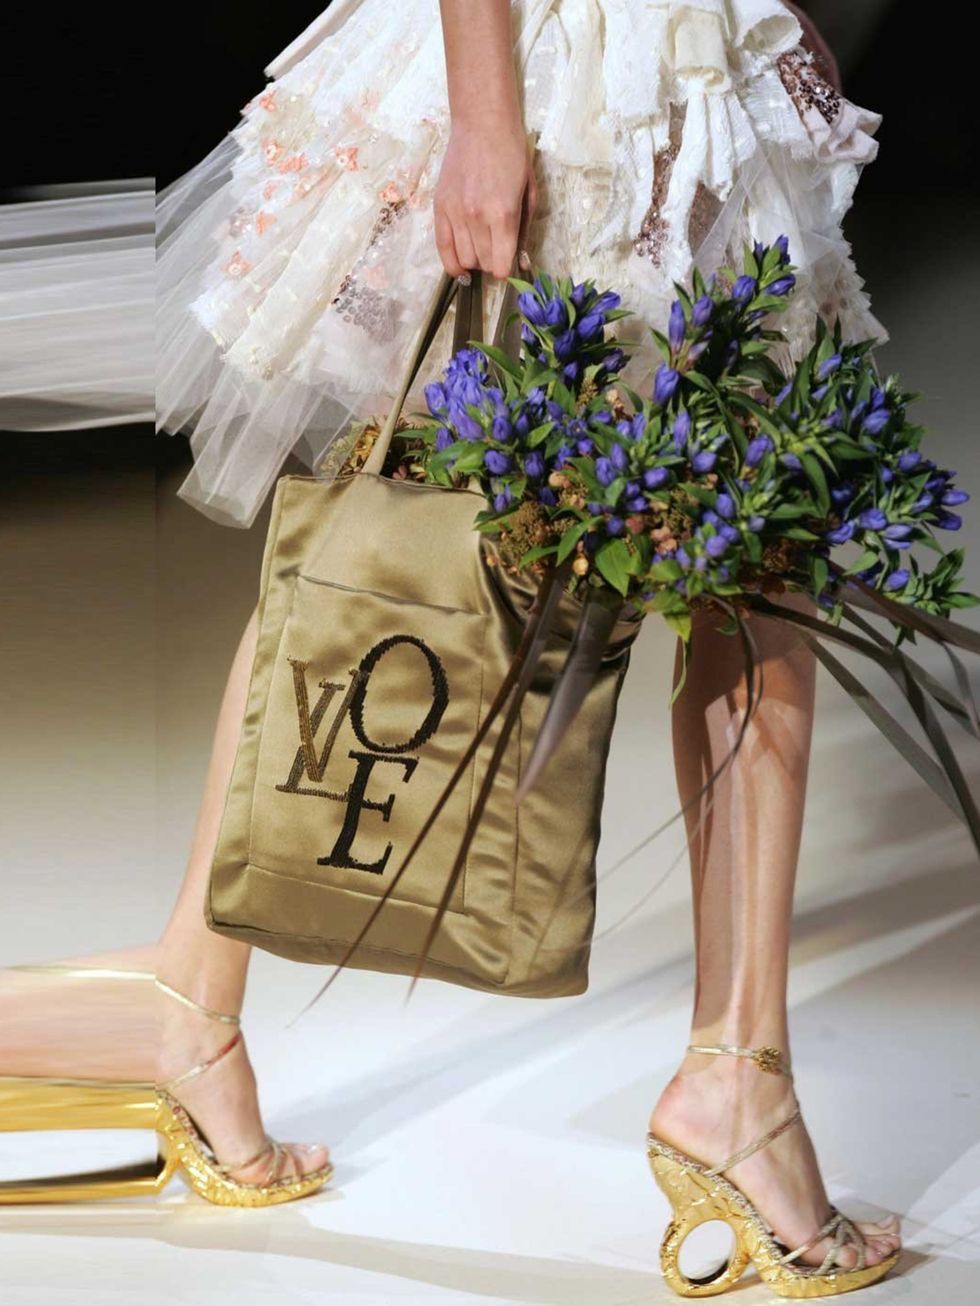 Louis Vuitton Fall 2009 Handbags & Shoes 